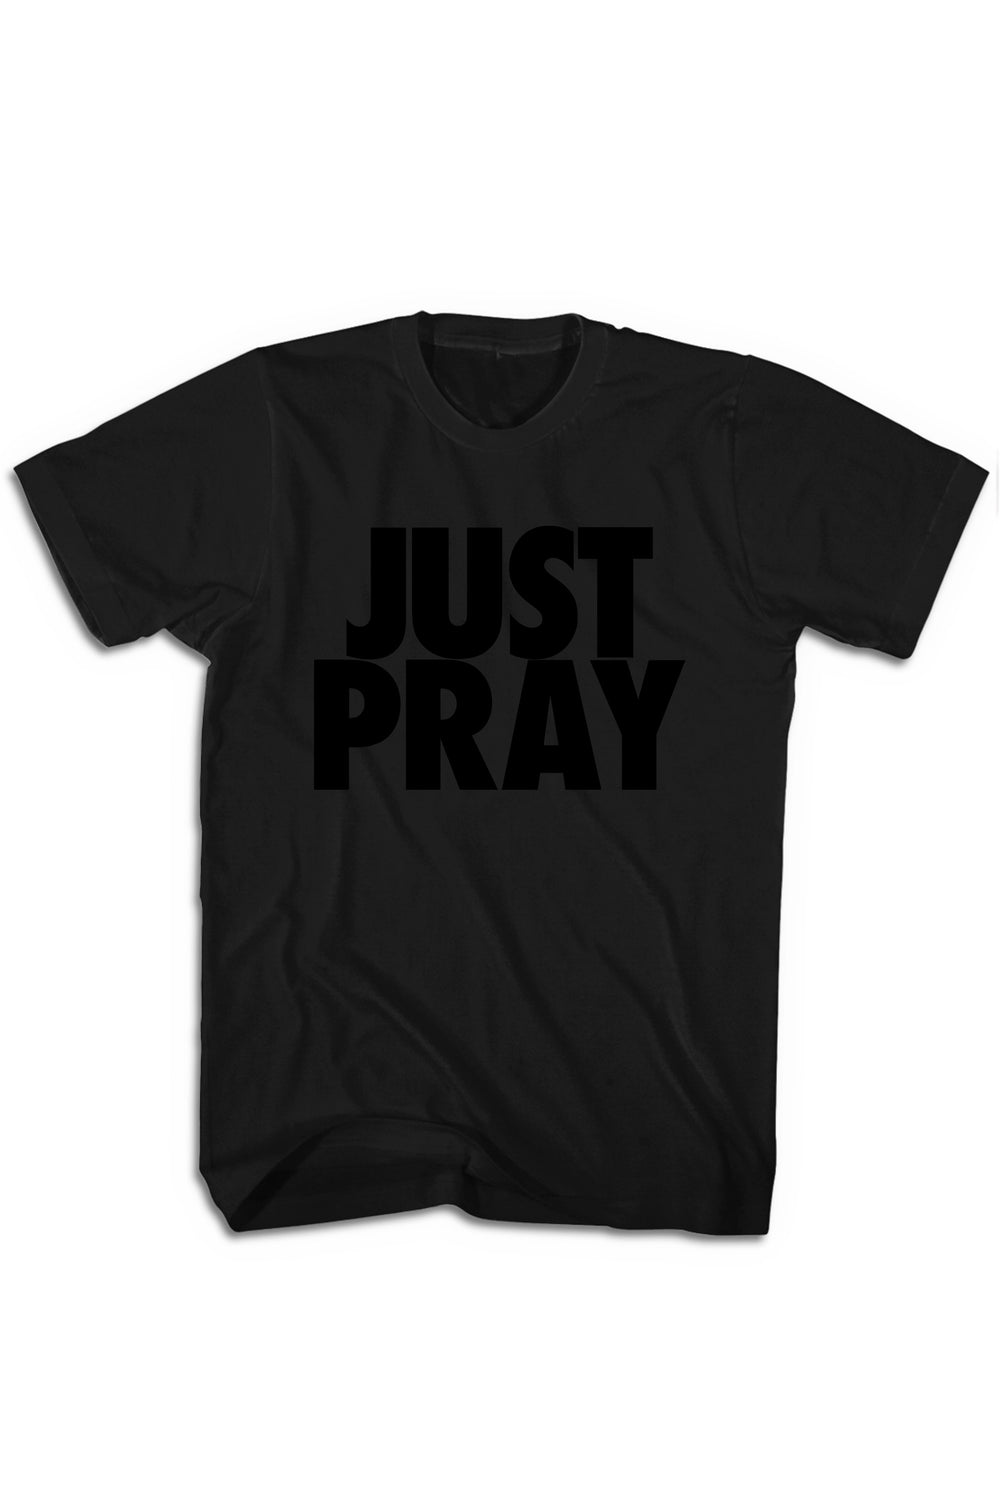 Just Pray Tee (Black Logo) - Zamage